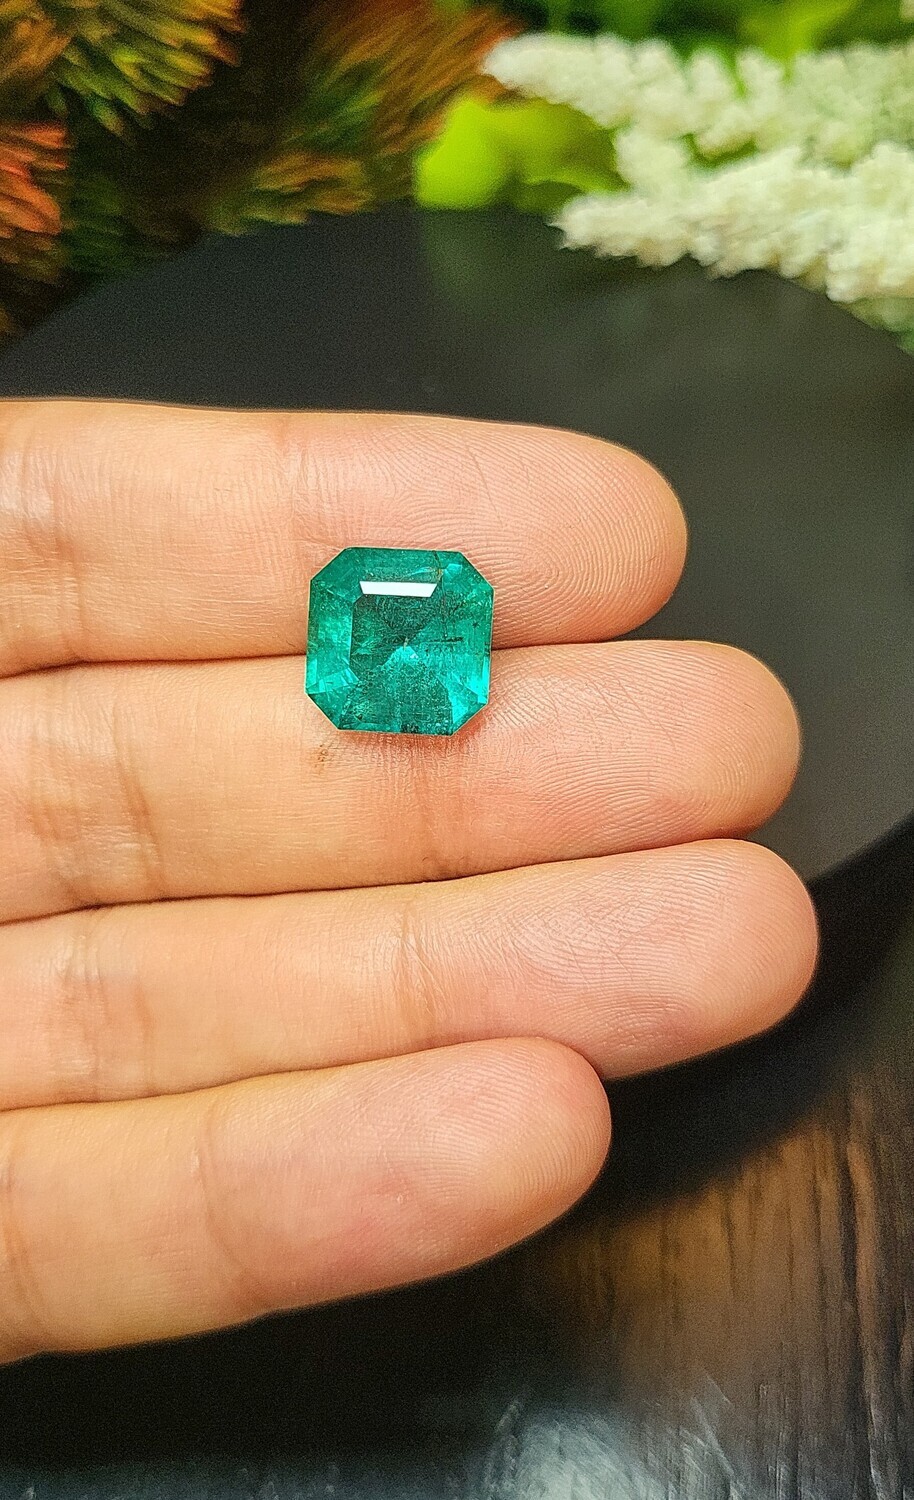 Sq.Emerald cut 9.25 ct